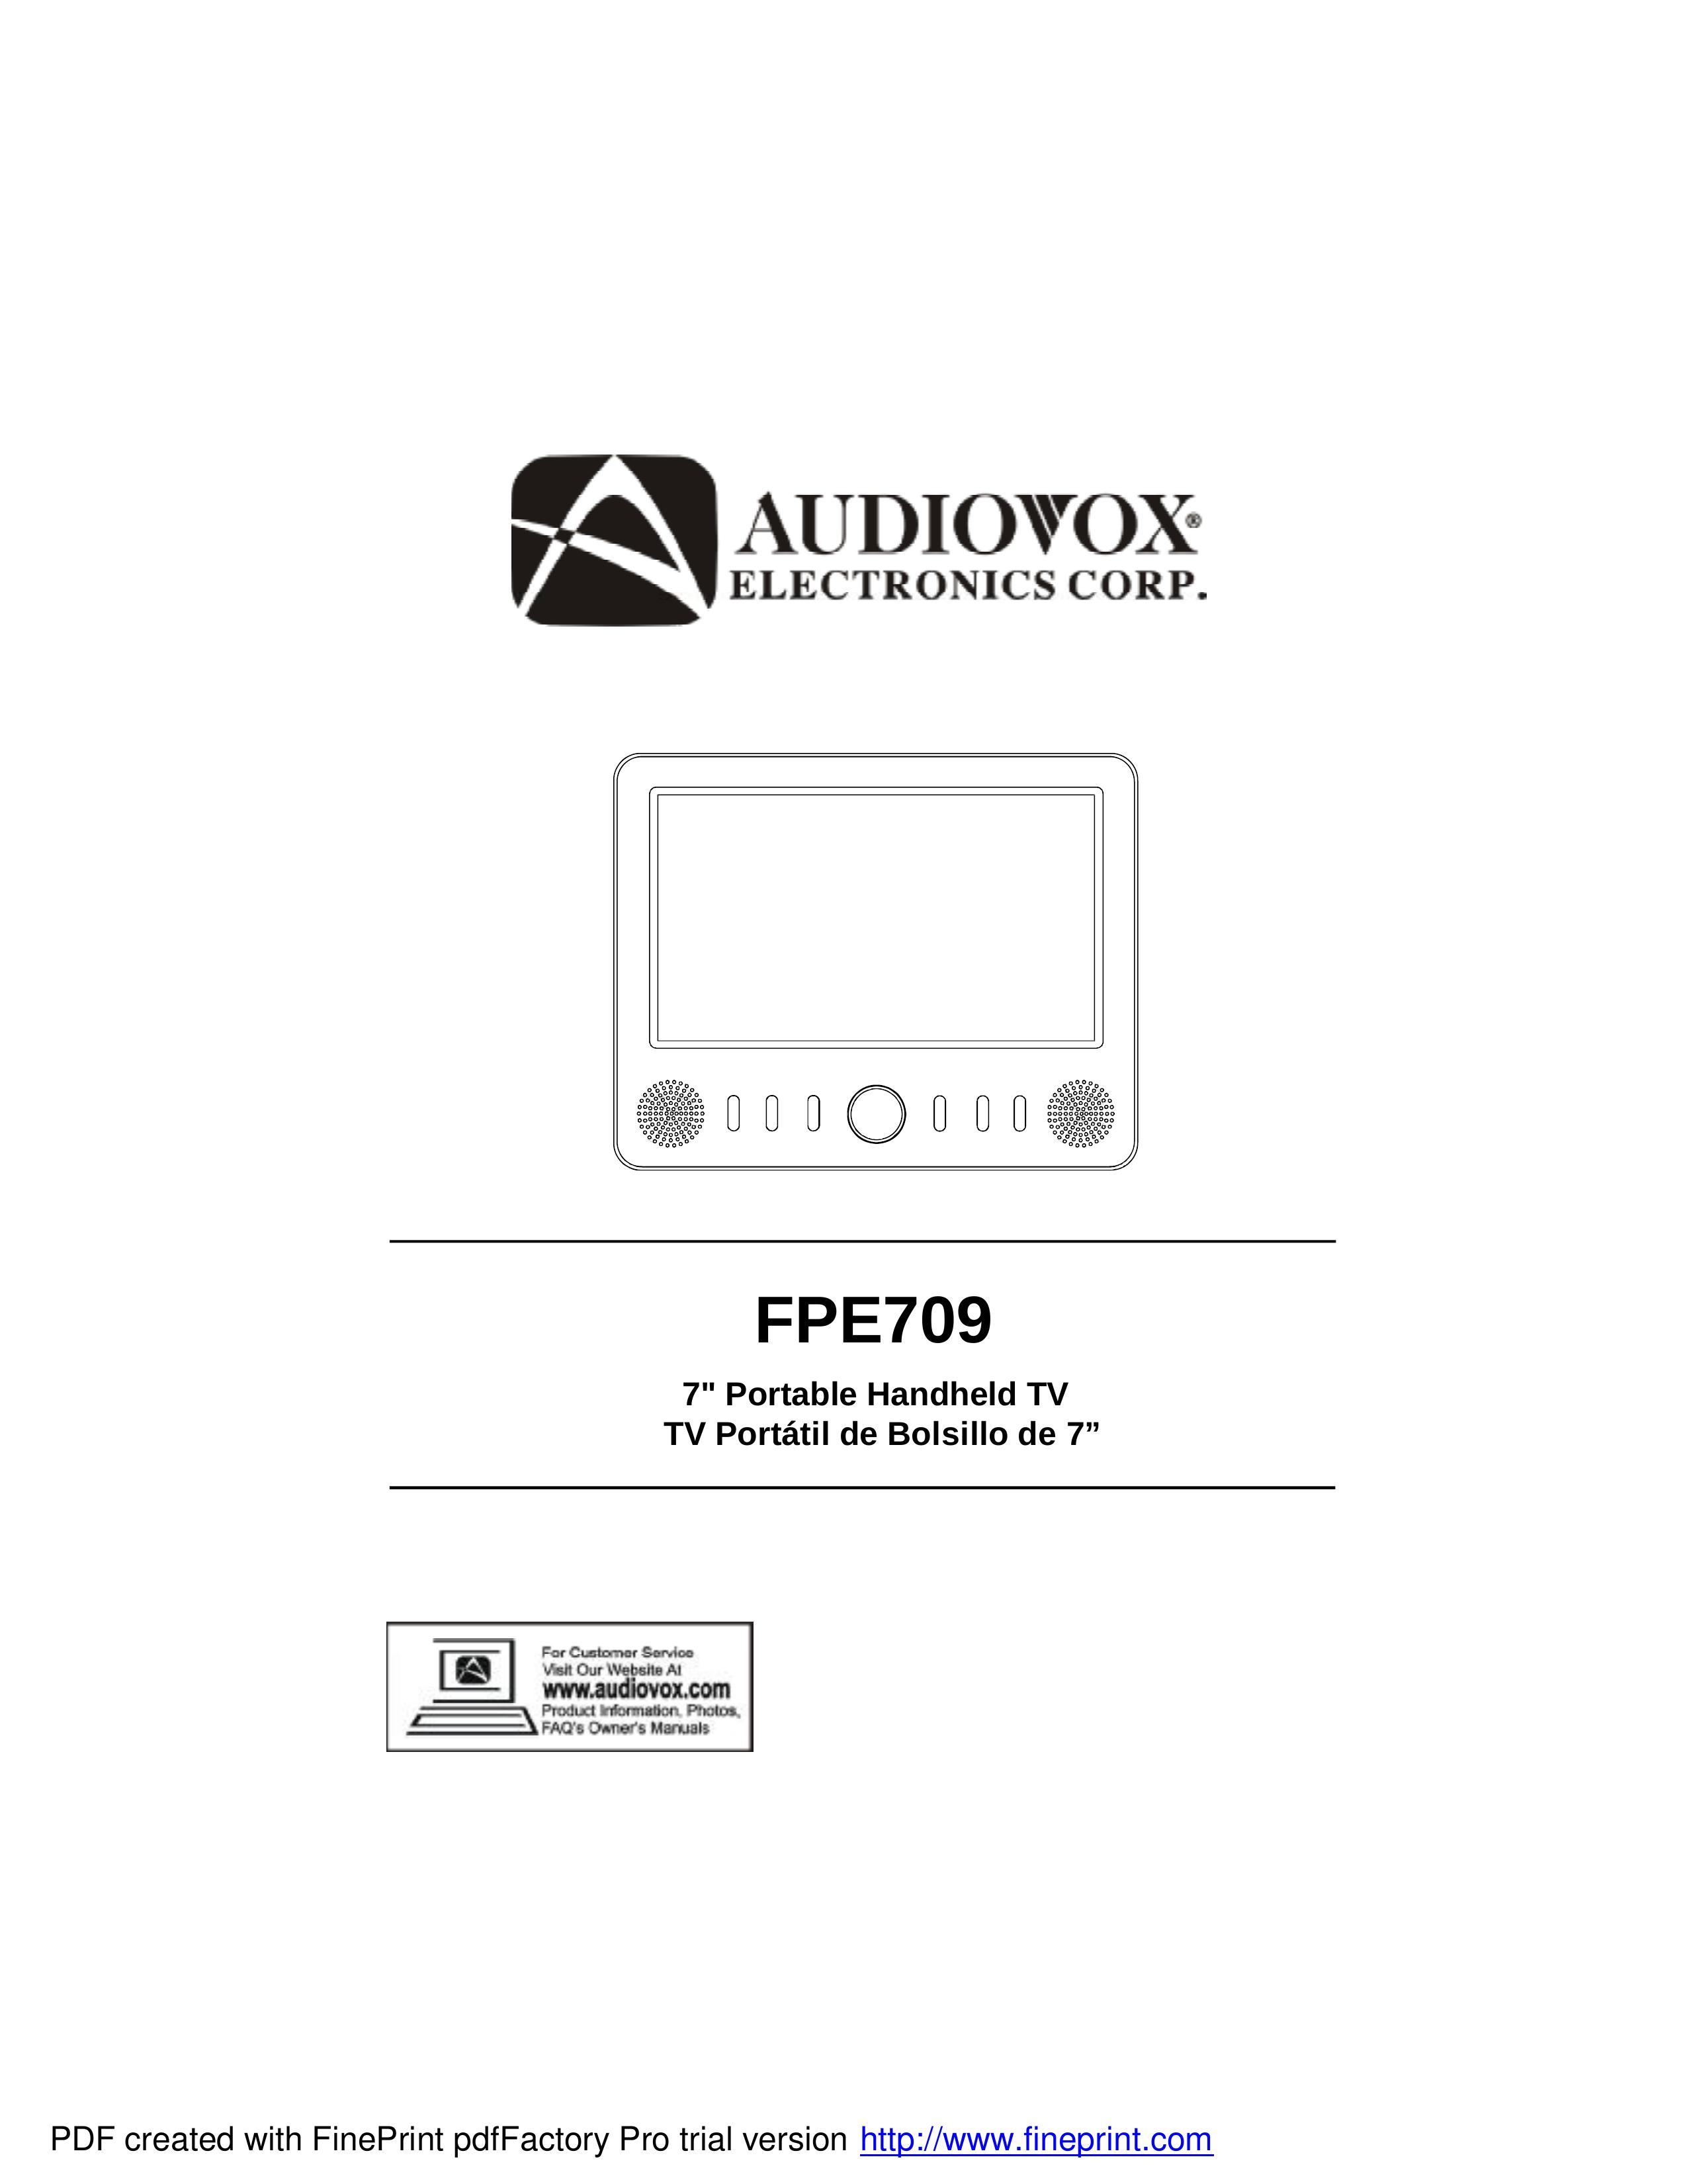 Audiovox FPE709 Handheld TV User Manual